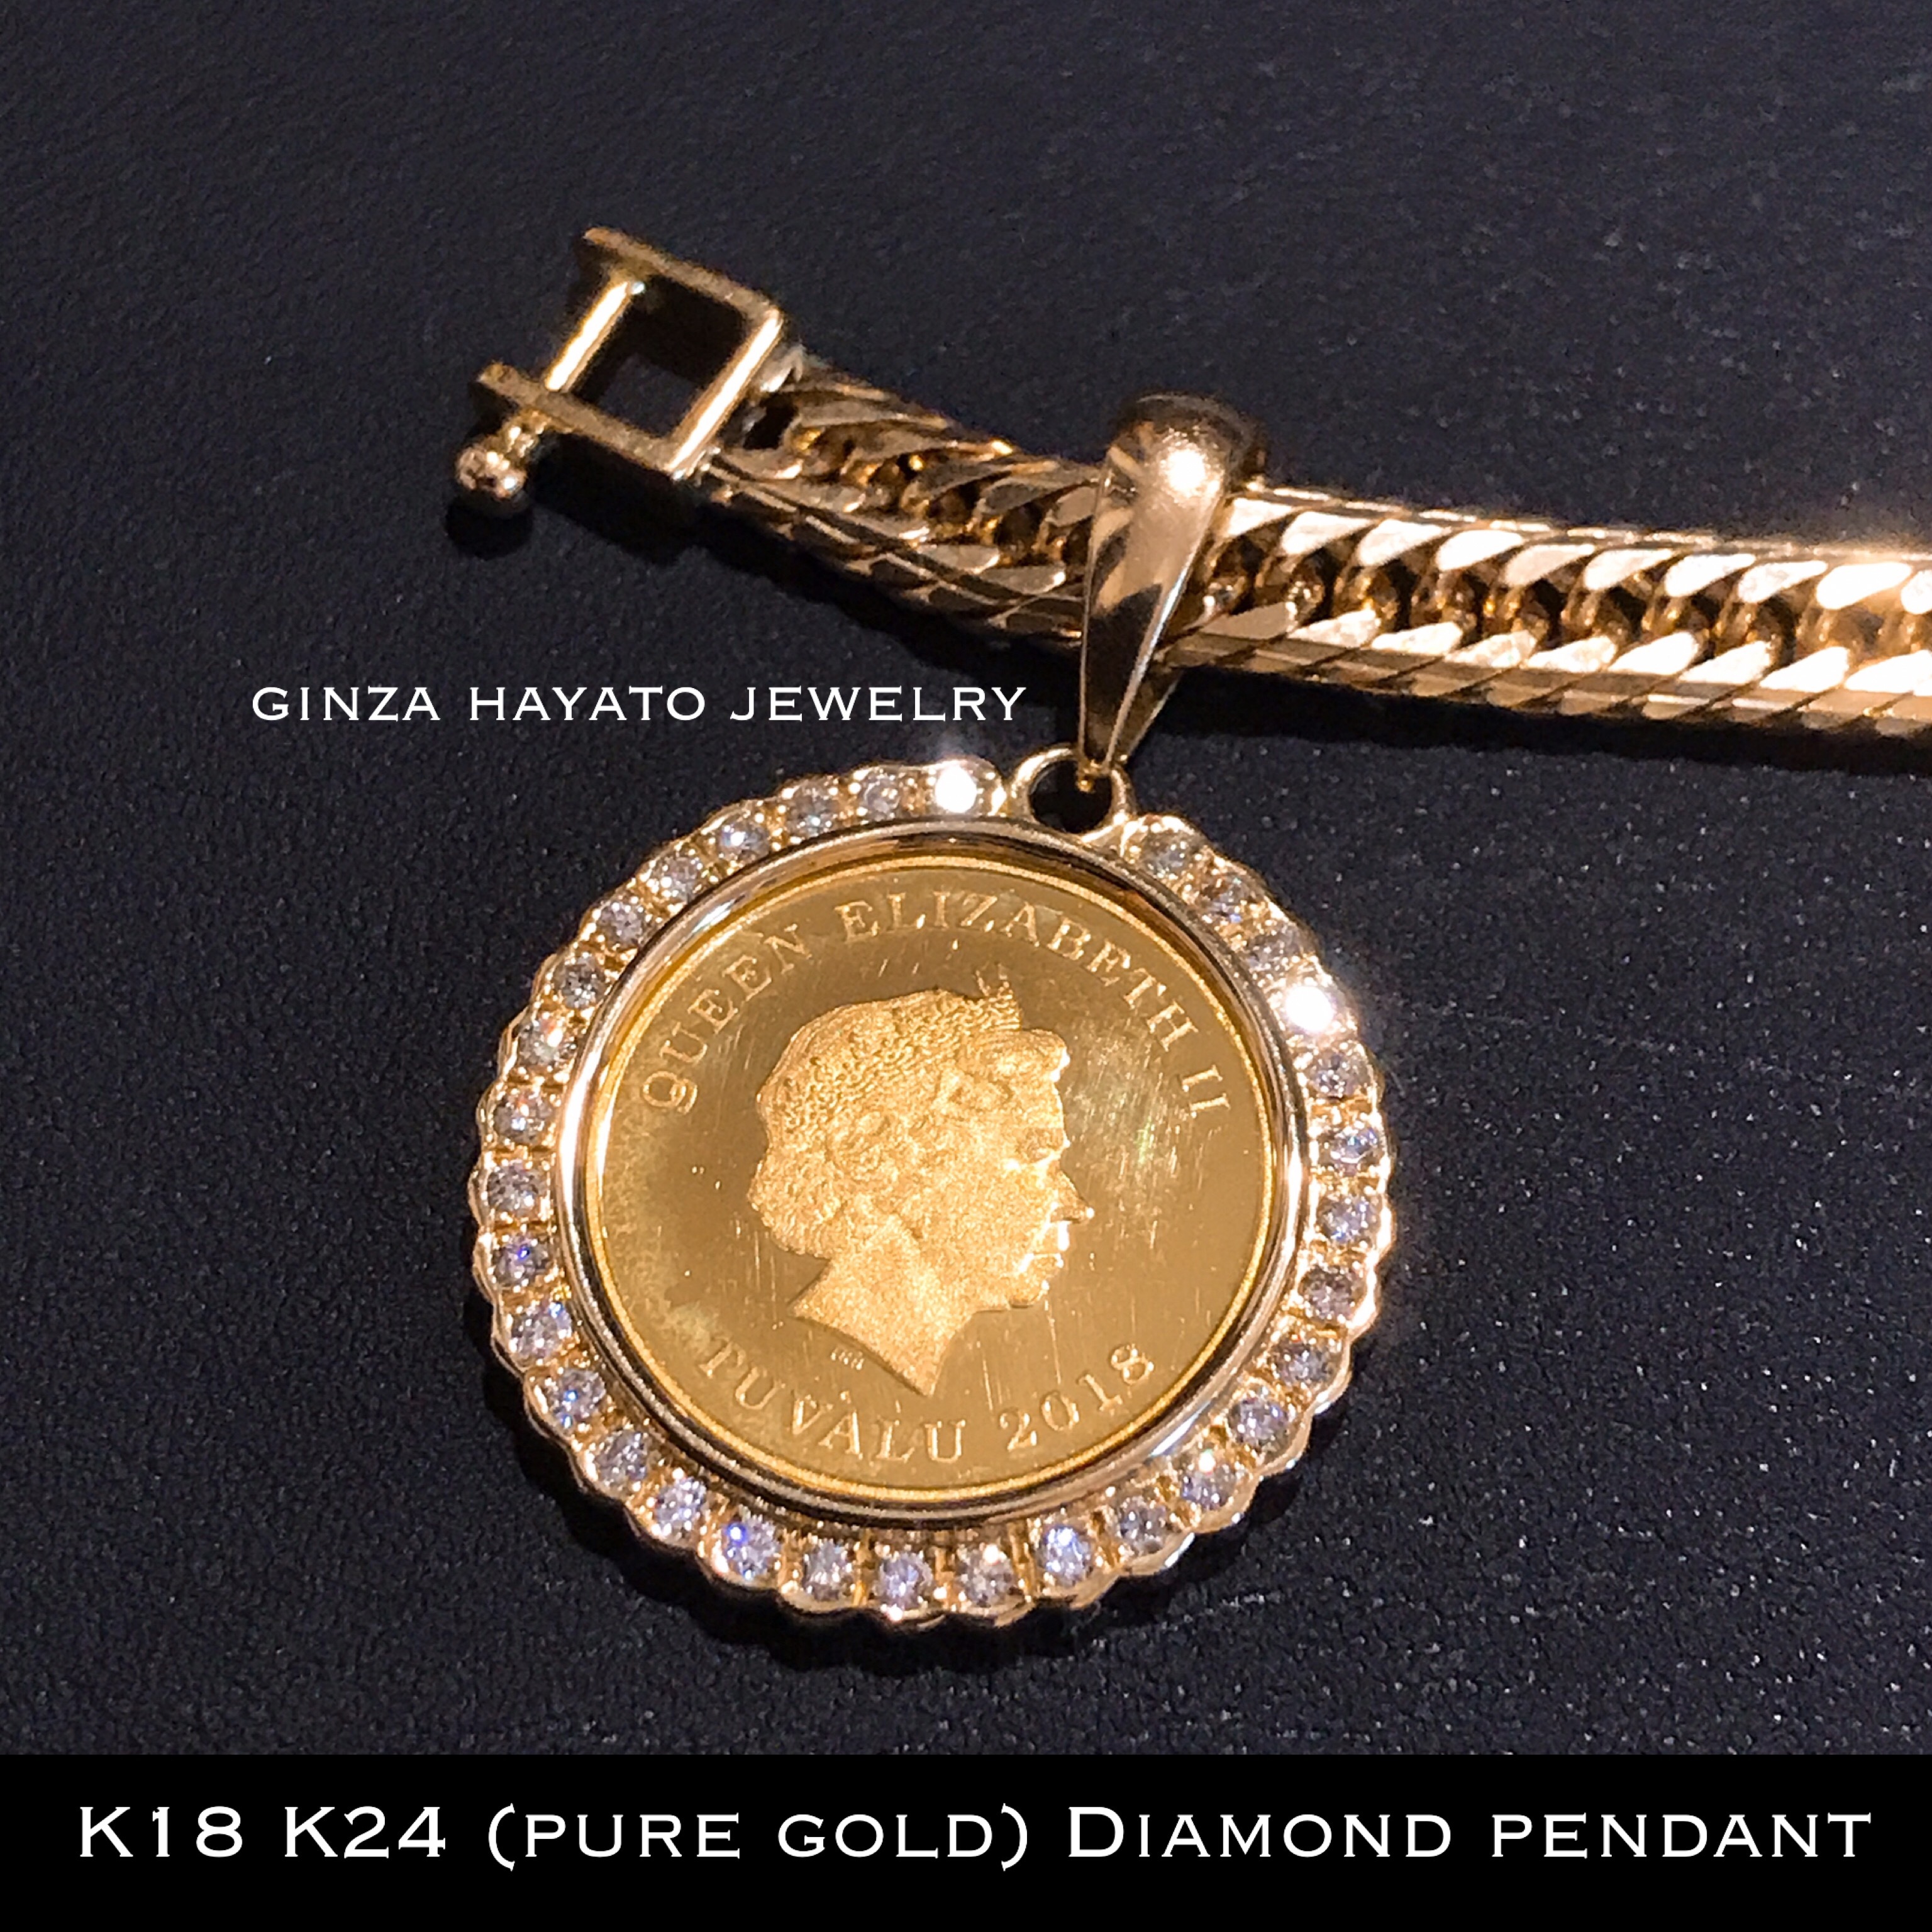 K18 K24 天然 ダイヤモンド 純金 コイン 1 25オンス ペンダント Diamond Pure Gold Coin 1 25oz Elizabeth Horse Pendant Ginza Hayato Jewelry